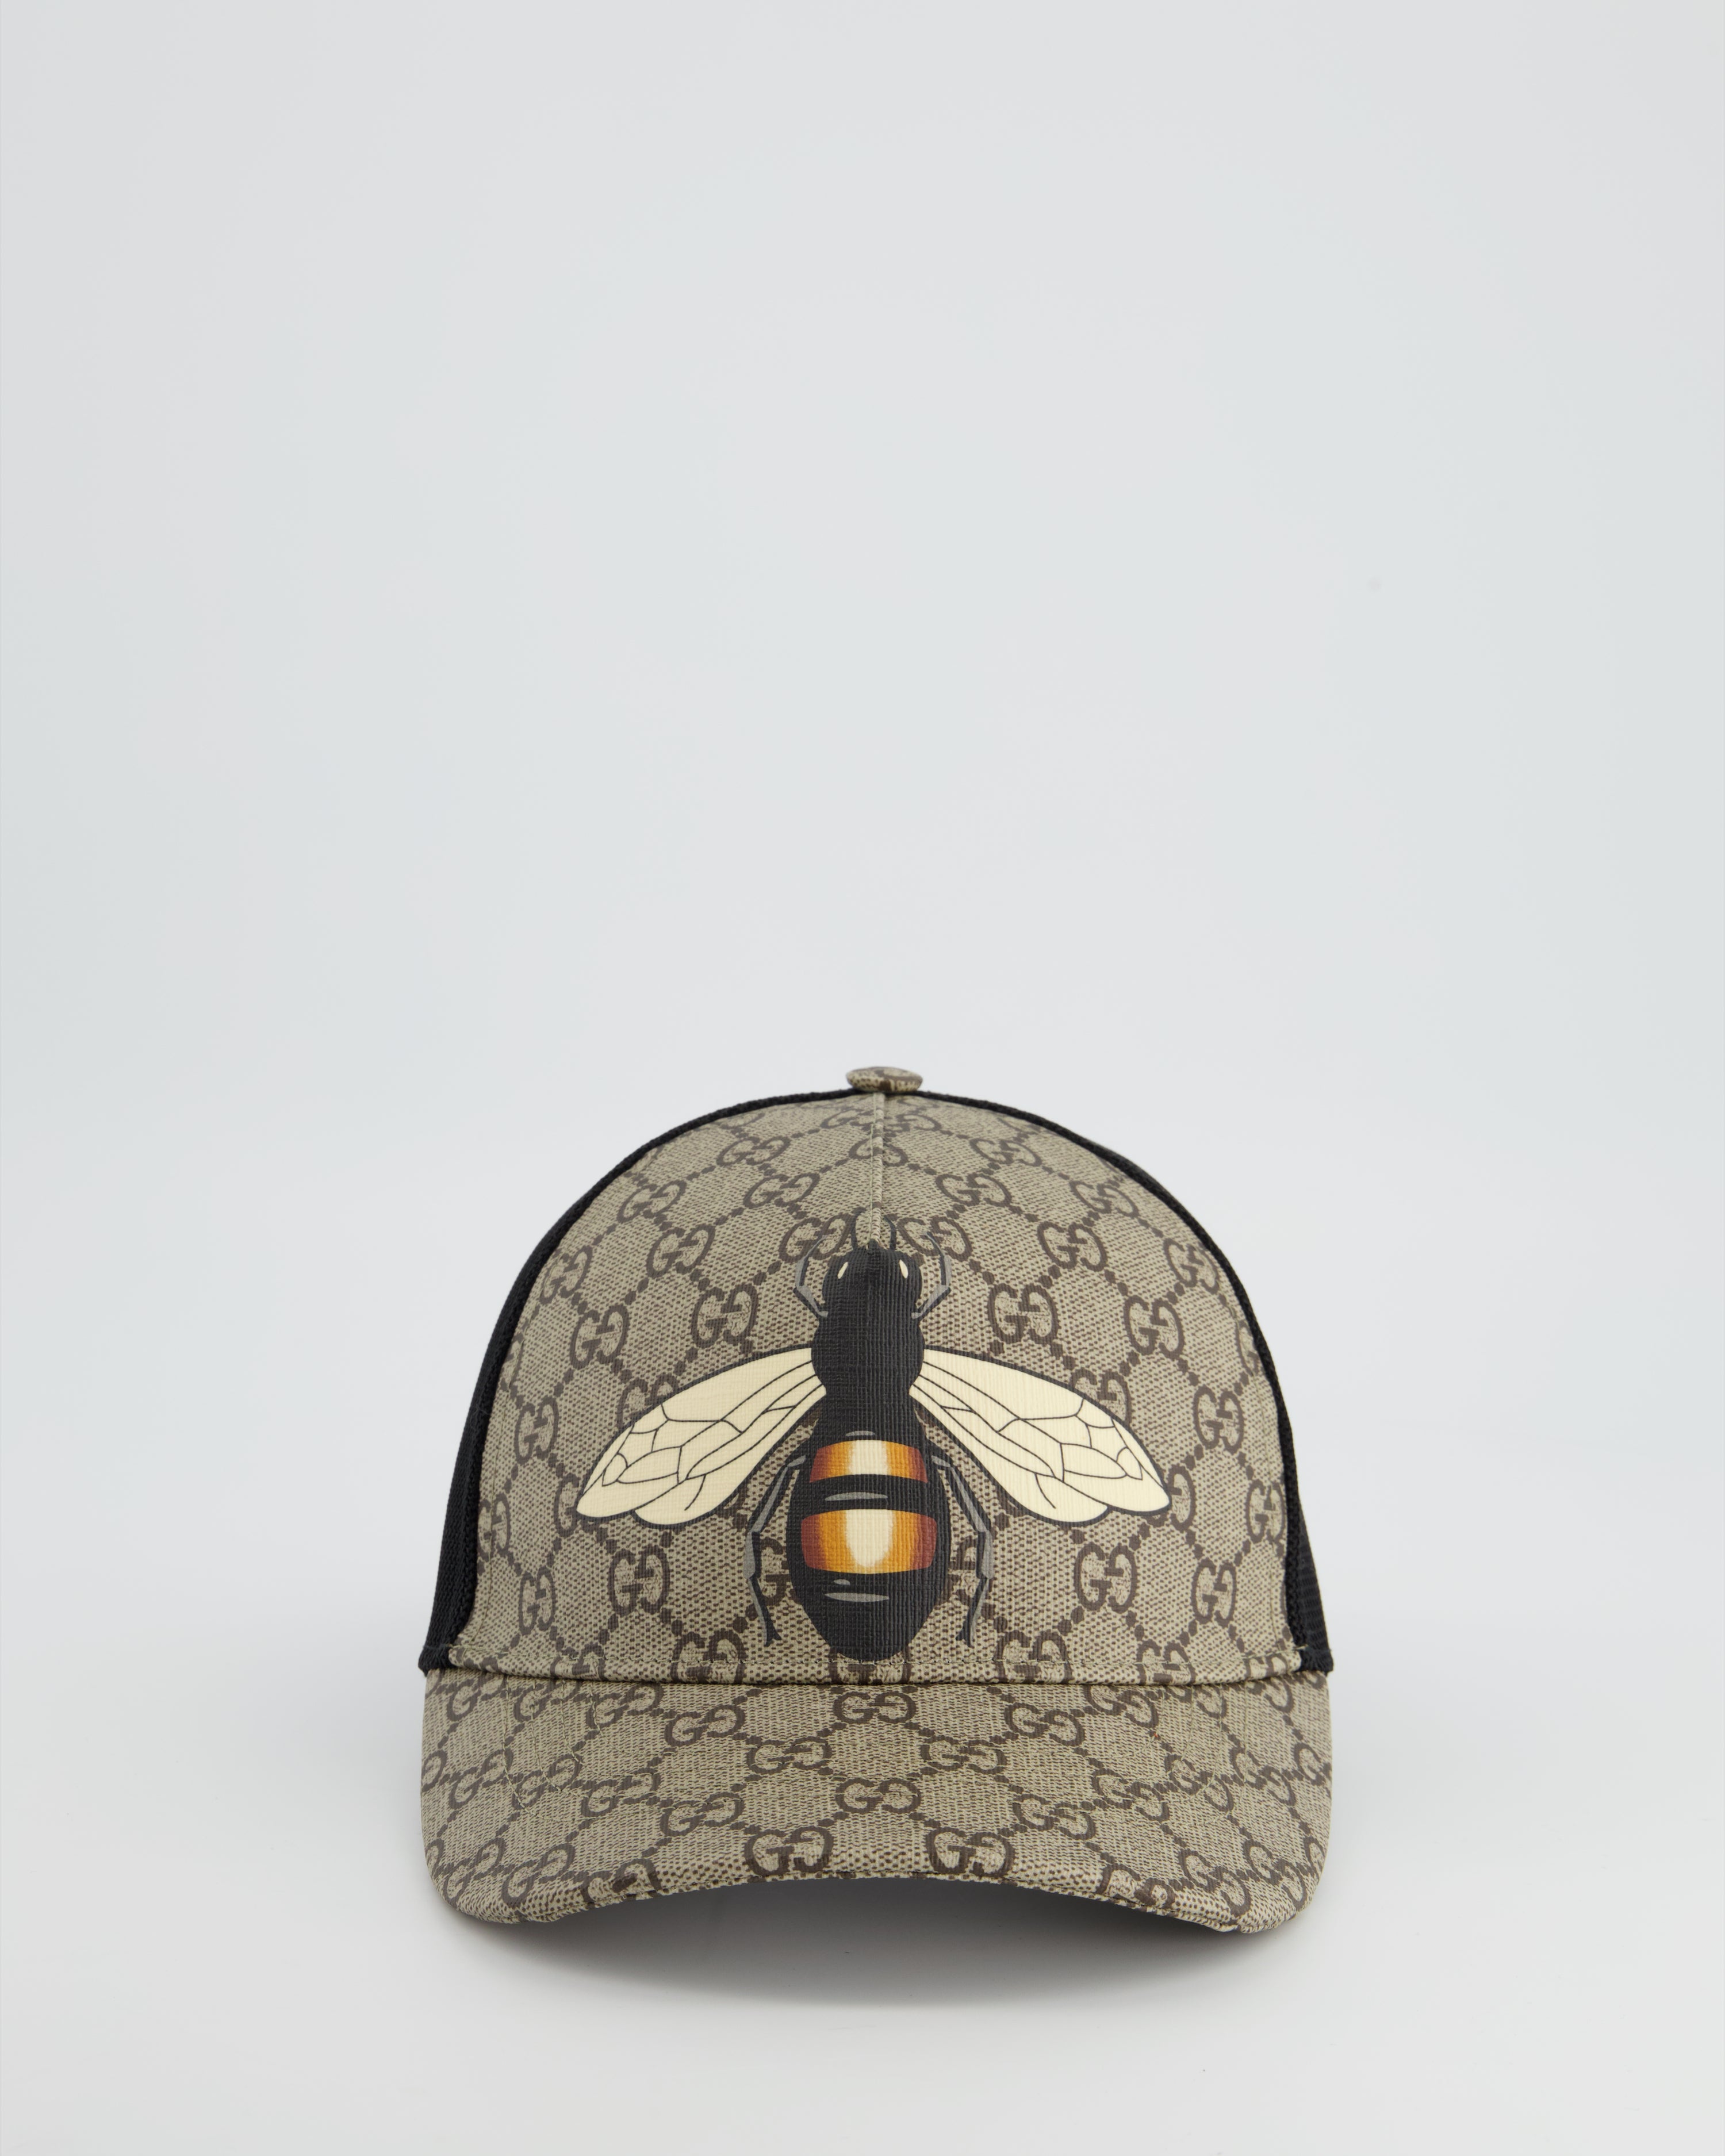 Gucci Chanel Logo Italian fashion Louis Vuitton, Gucci bee